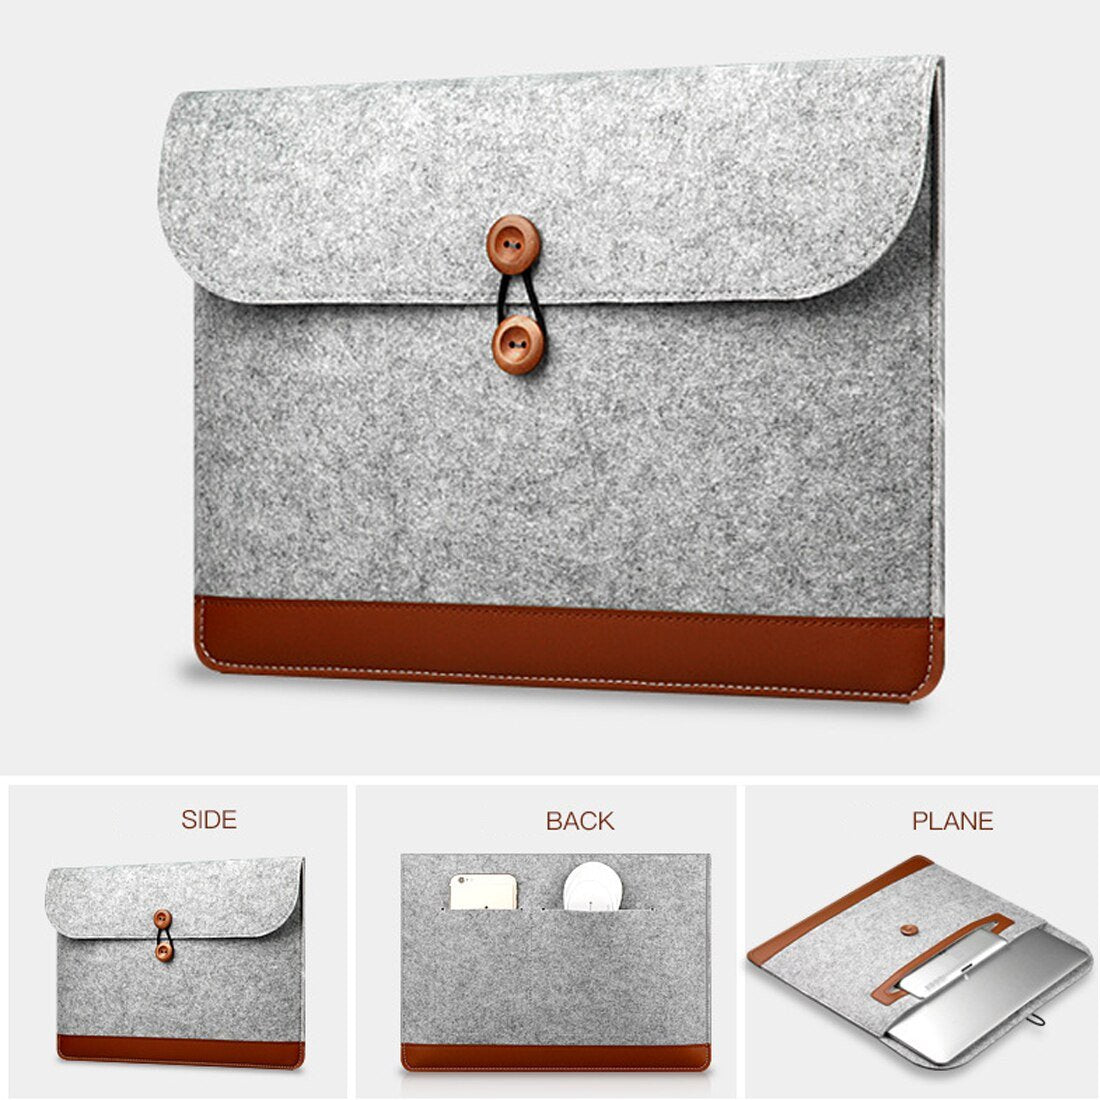 Wool Felt Laptop Sleeve Bag For Macbook Air Pro Retina 11 12 13 15 Inch Notebook String Handbag Cover Case for Macbook Touch Bar GreatEagleInc